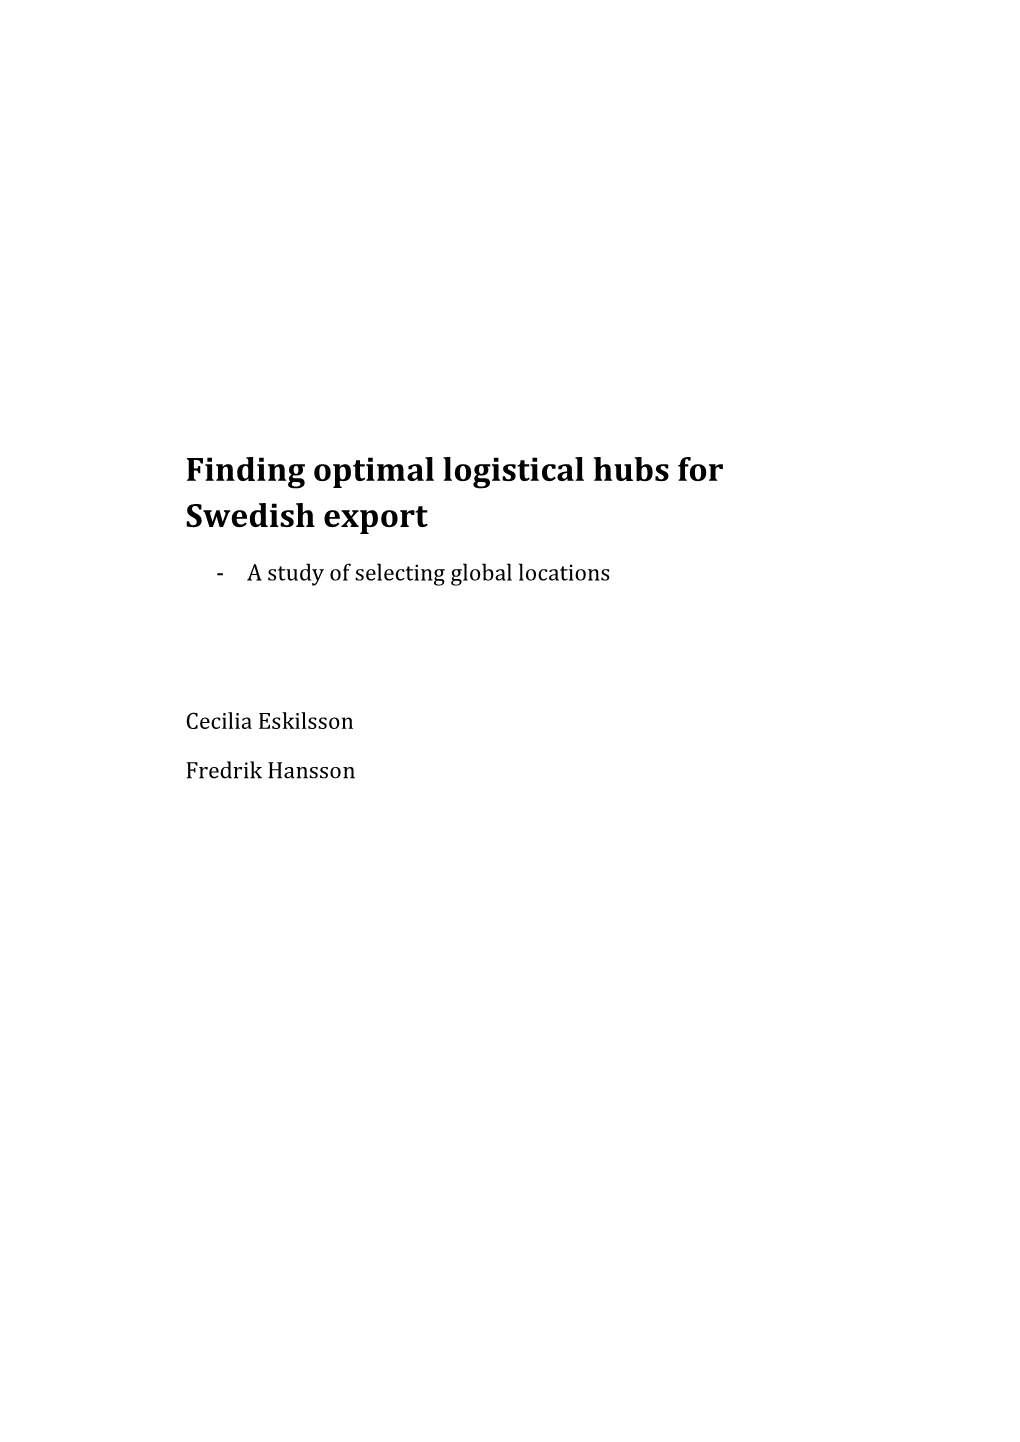 Finding Optimal Logistical Hubs for Swedish Export